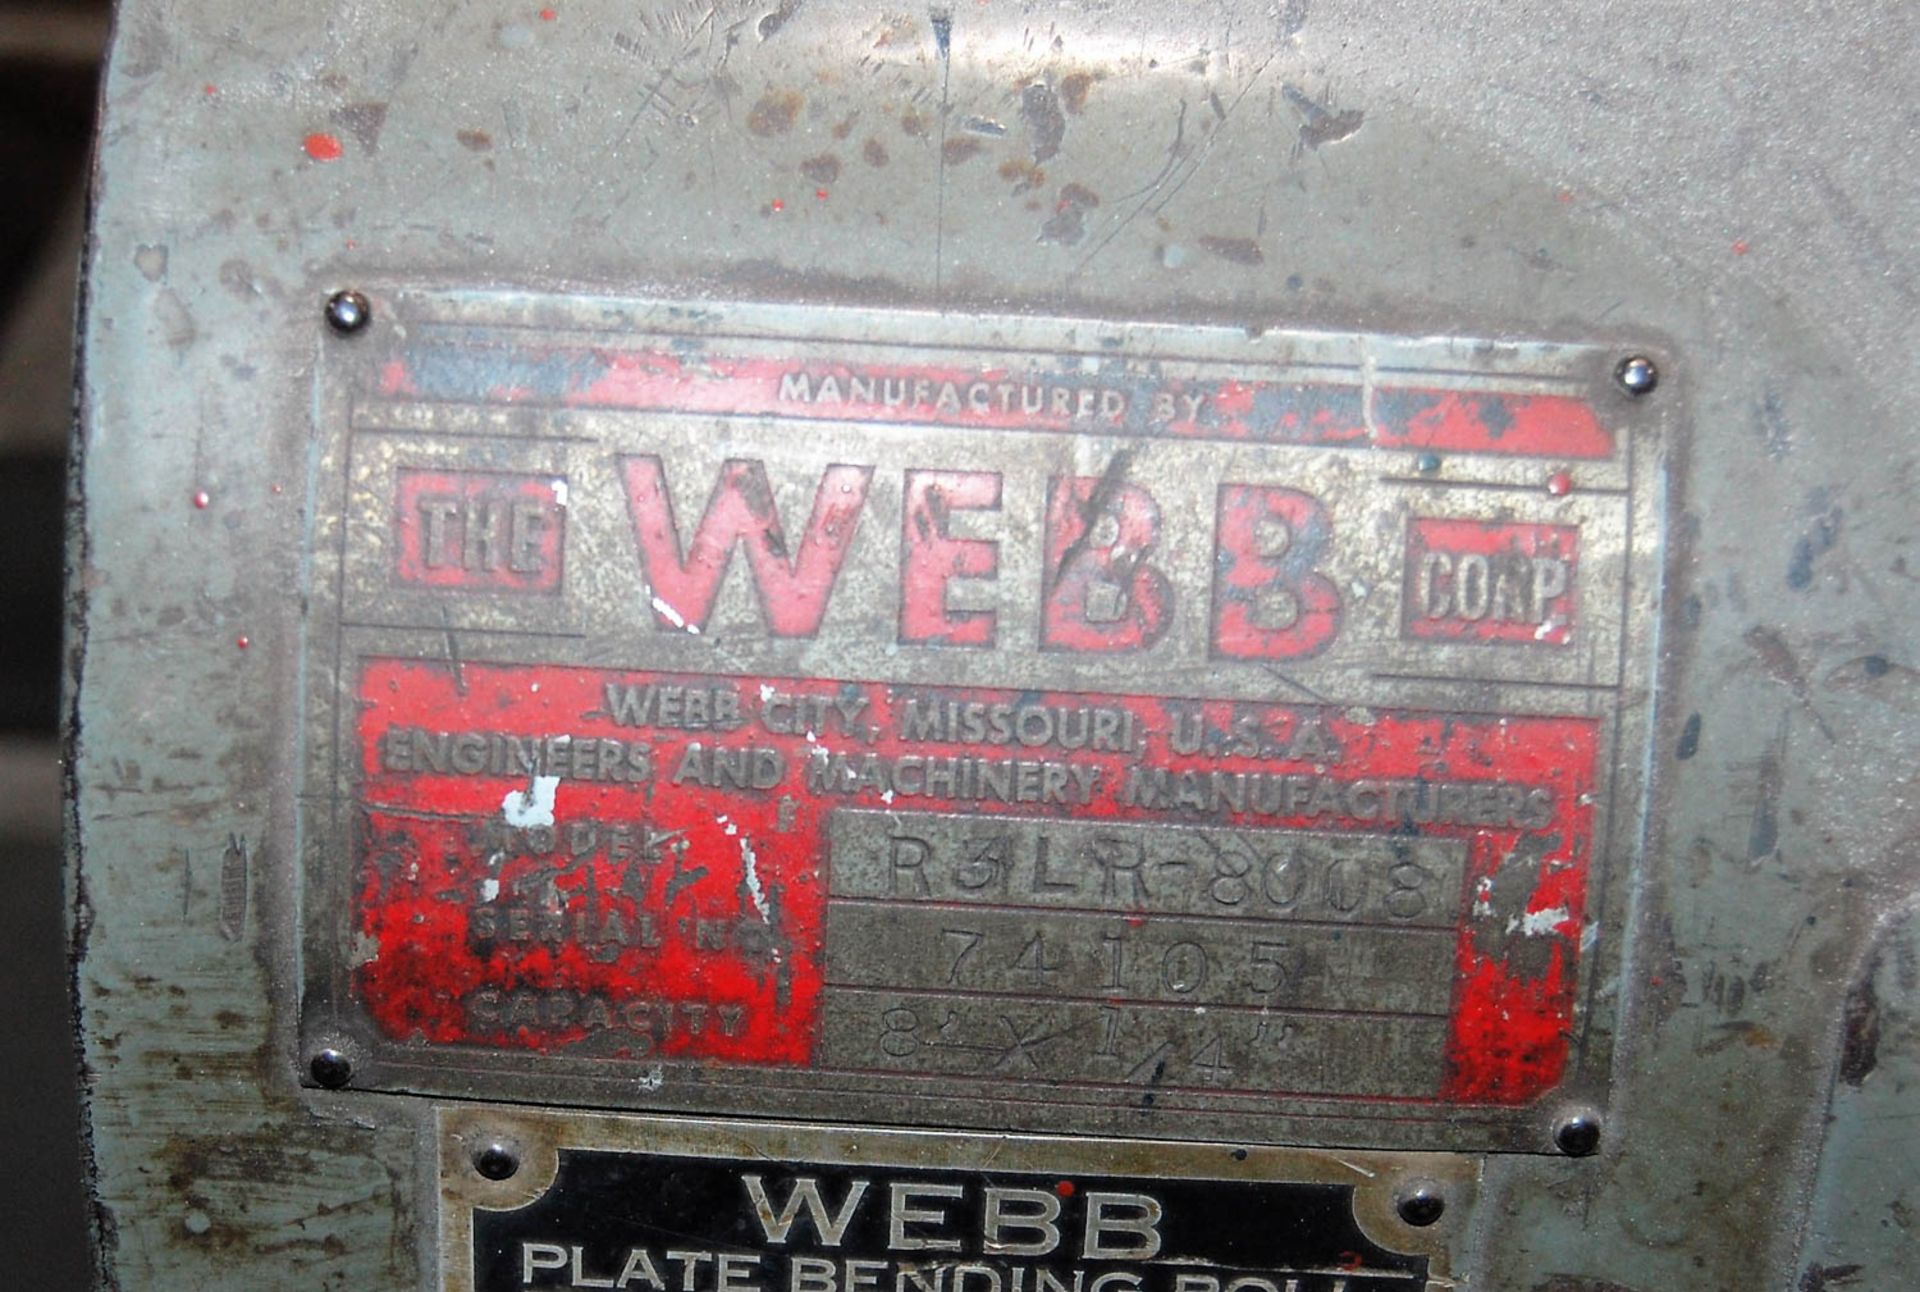 WEBB MDL. R3LR-80008 1/4'' X 8' INITIAL PINCH TYPE BENDING ROLL, PNEUMATIC DROP END, MOTORIZED - Image 8 of 8